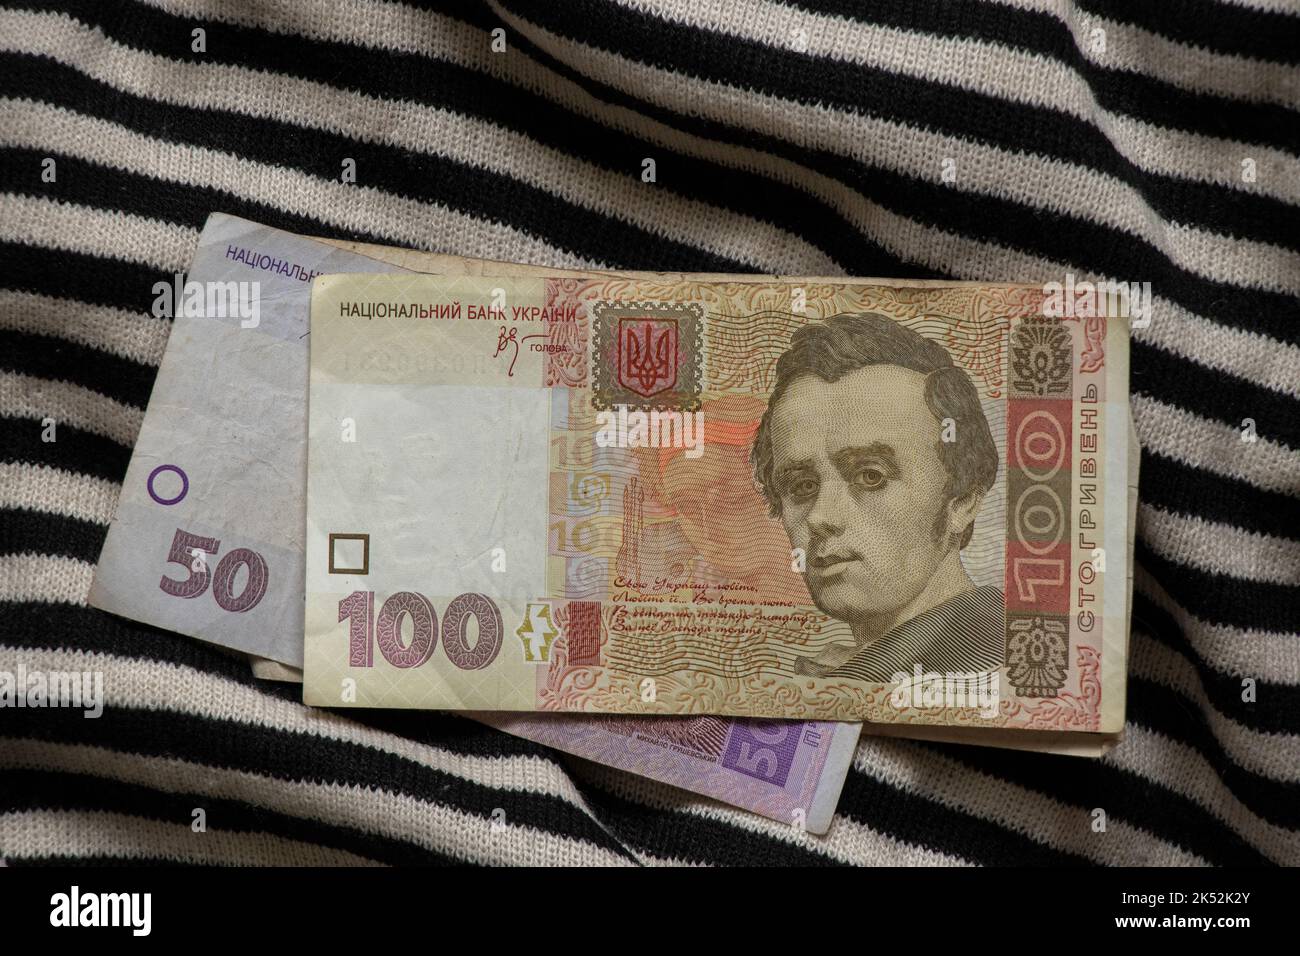 Ukrainian money one hundred and fifty hryvnia lie on a black and white striped background, Ukrainian money, finance Stock Photo